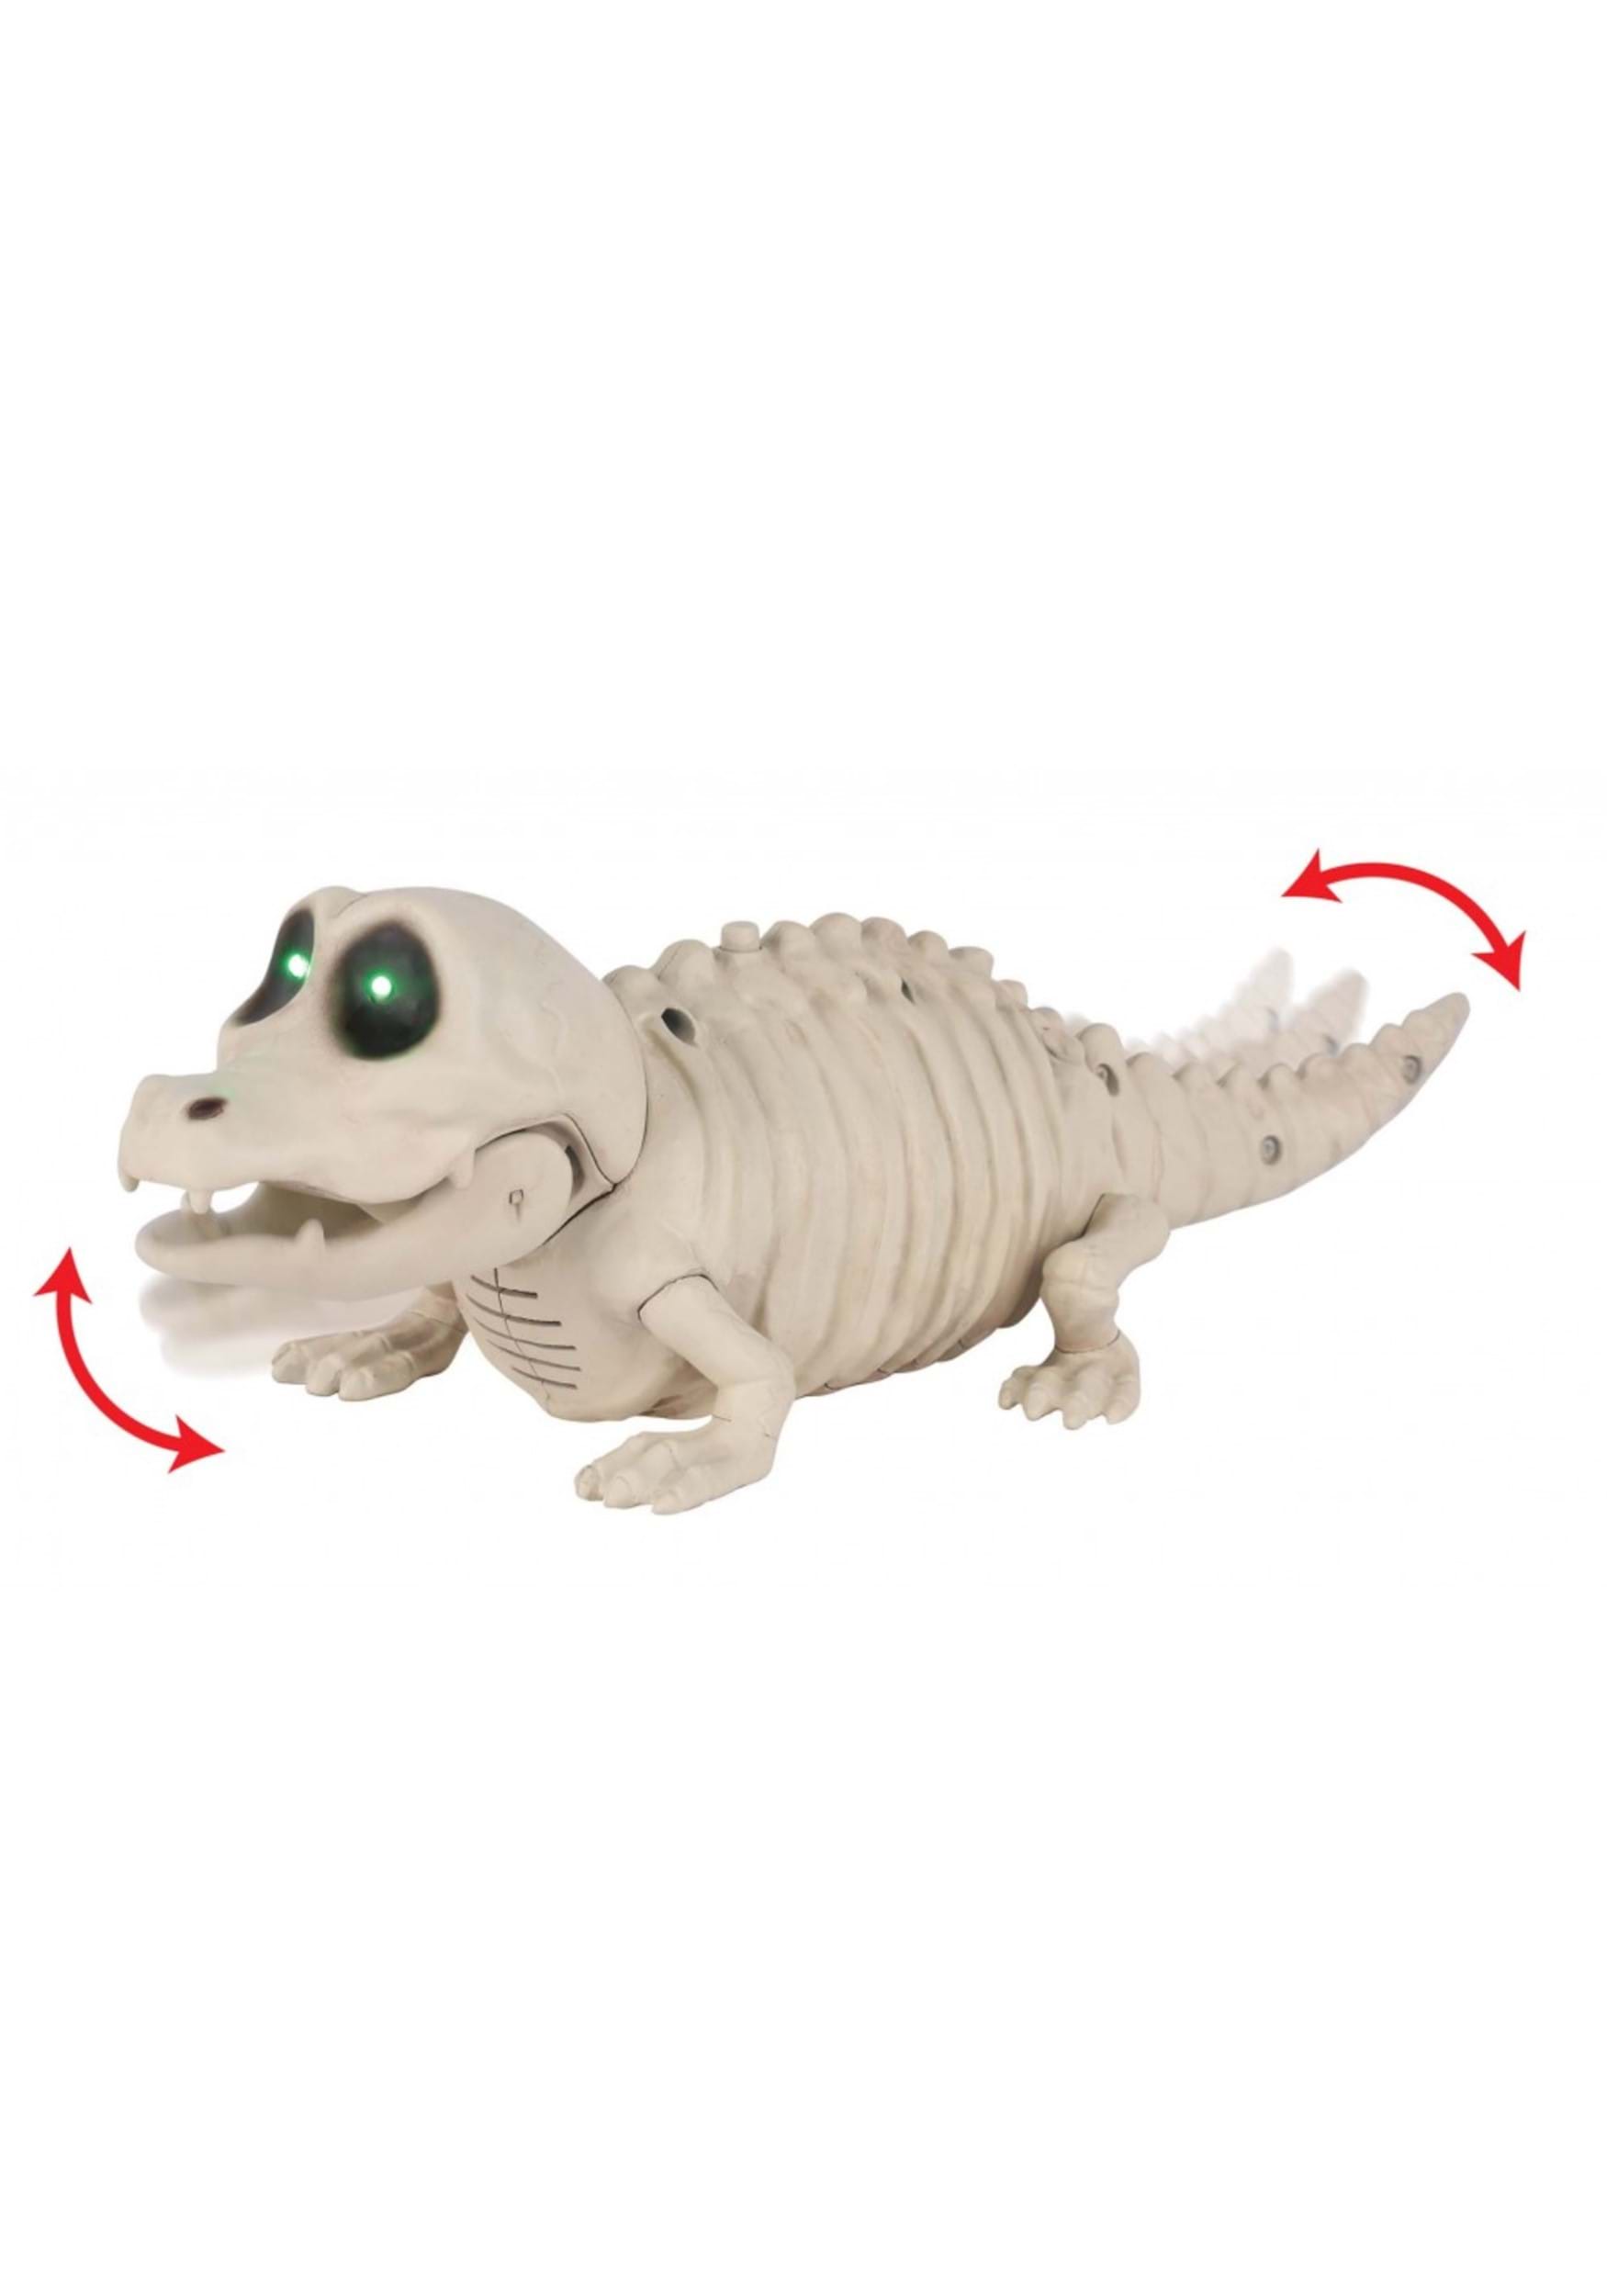 Gator Bones Light Up Halloween Decoration